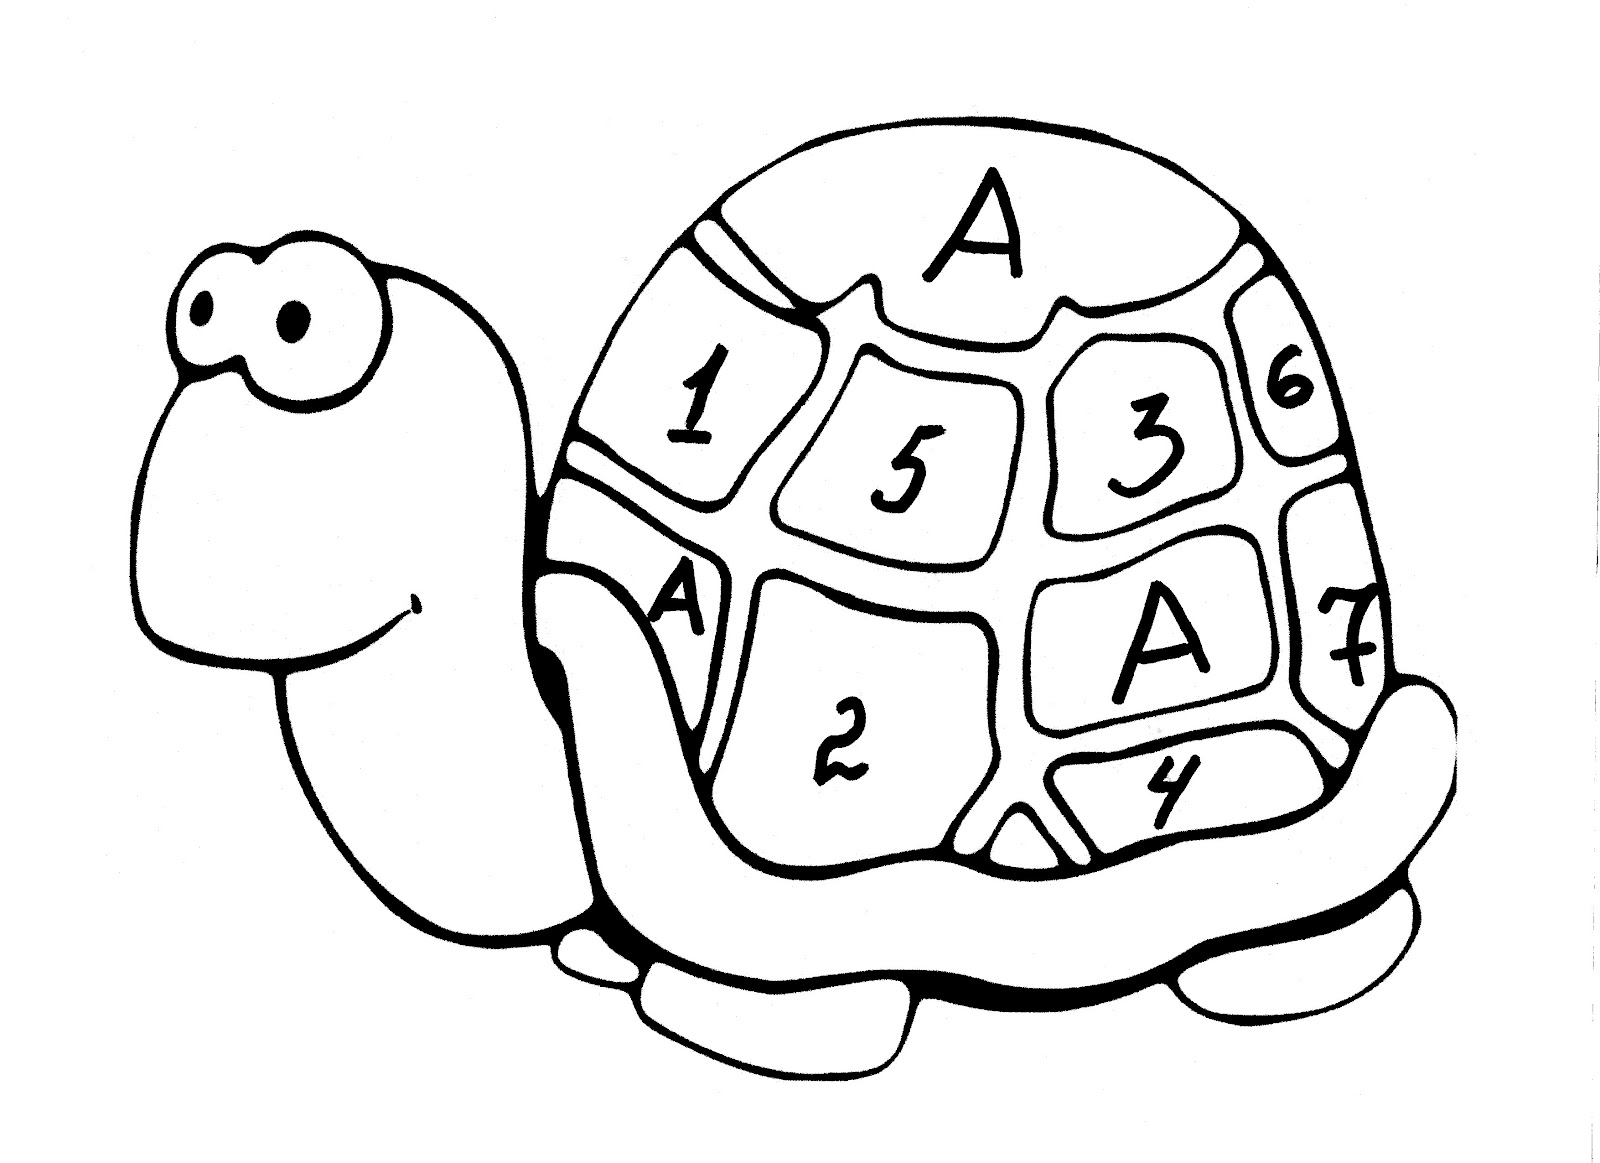 Алиса черепахи. По черепаху с буквой а. Раскраска как сделать сквиж.